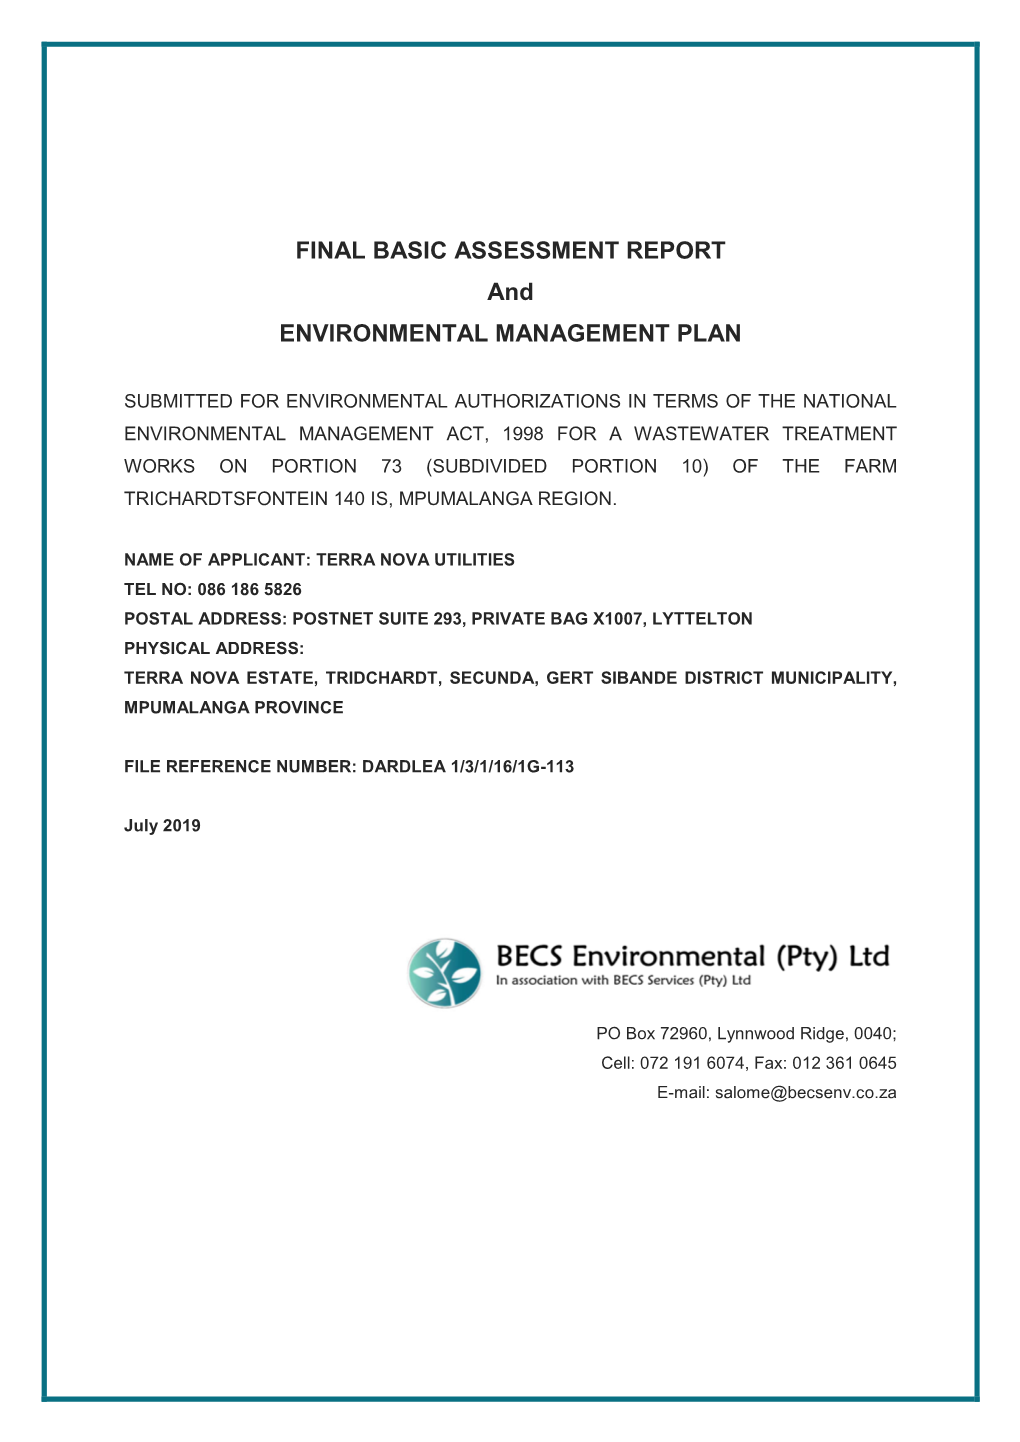 FINAL BASIC ASSESSMENT REPORT and ENVIRONMENTAL MANAGEMENT PLAN